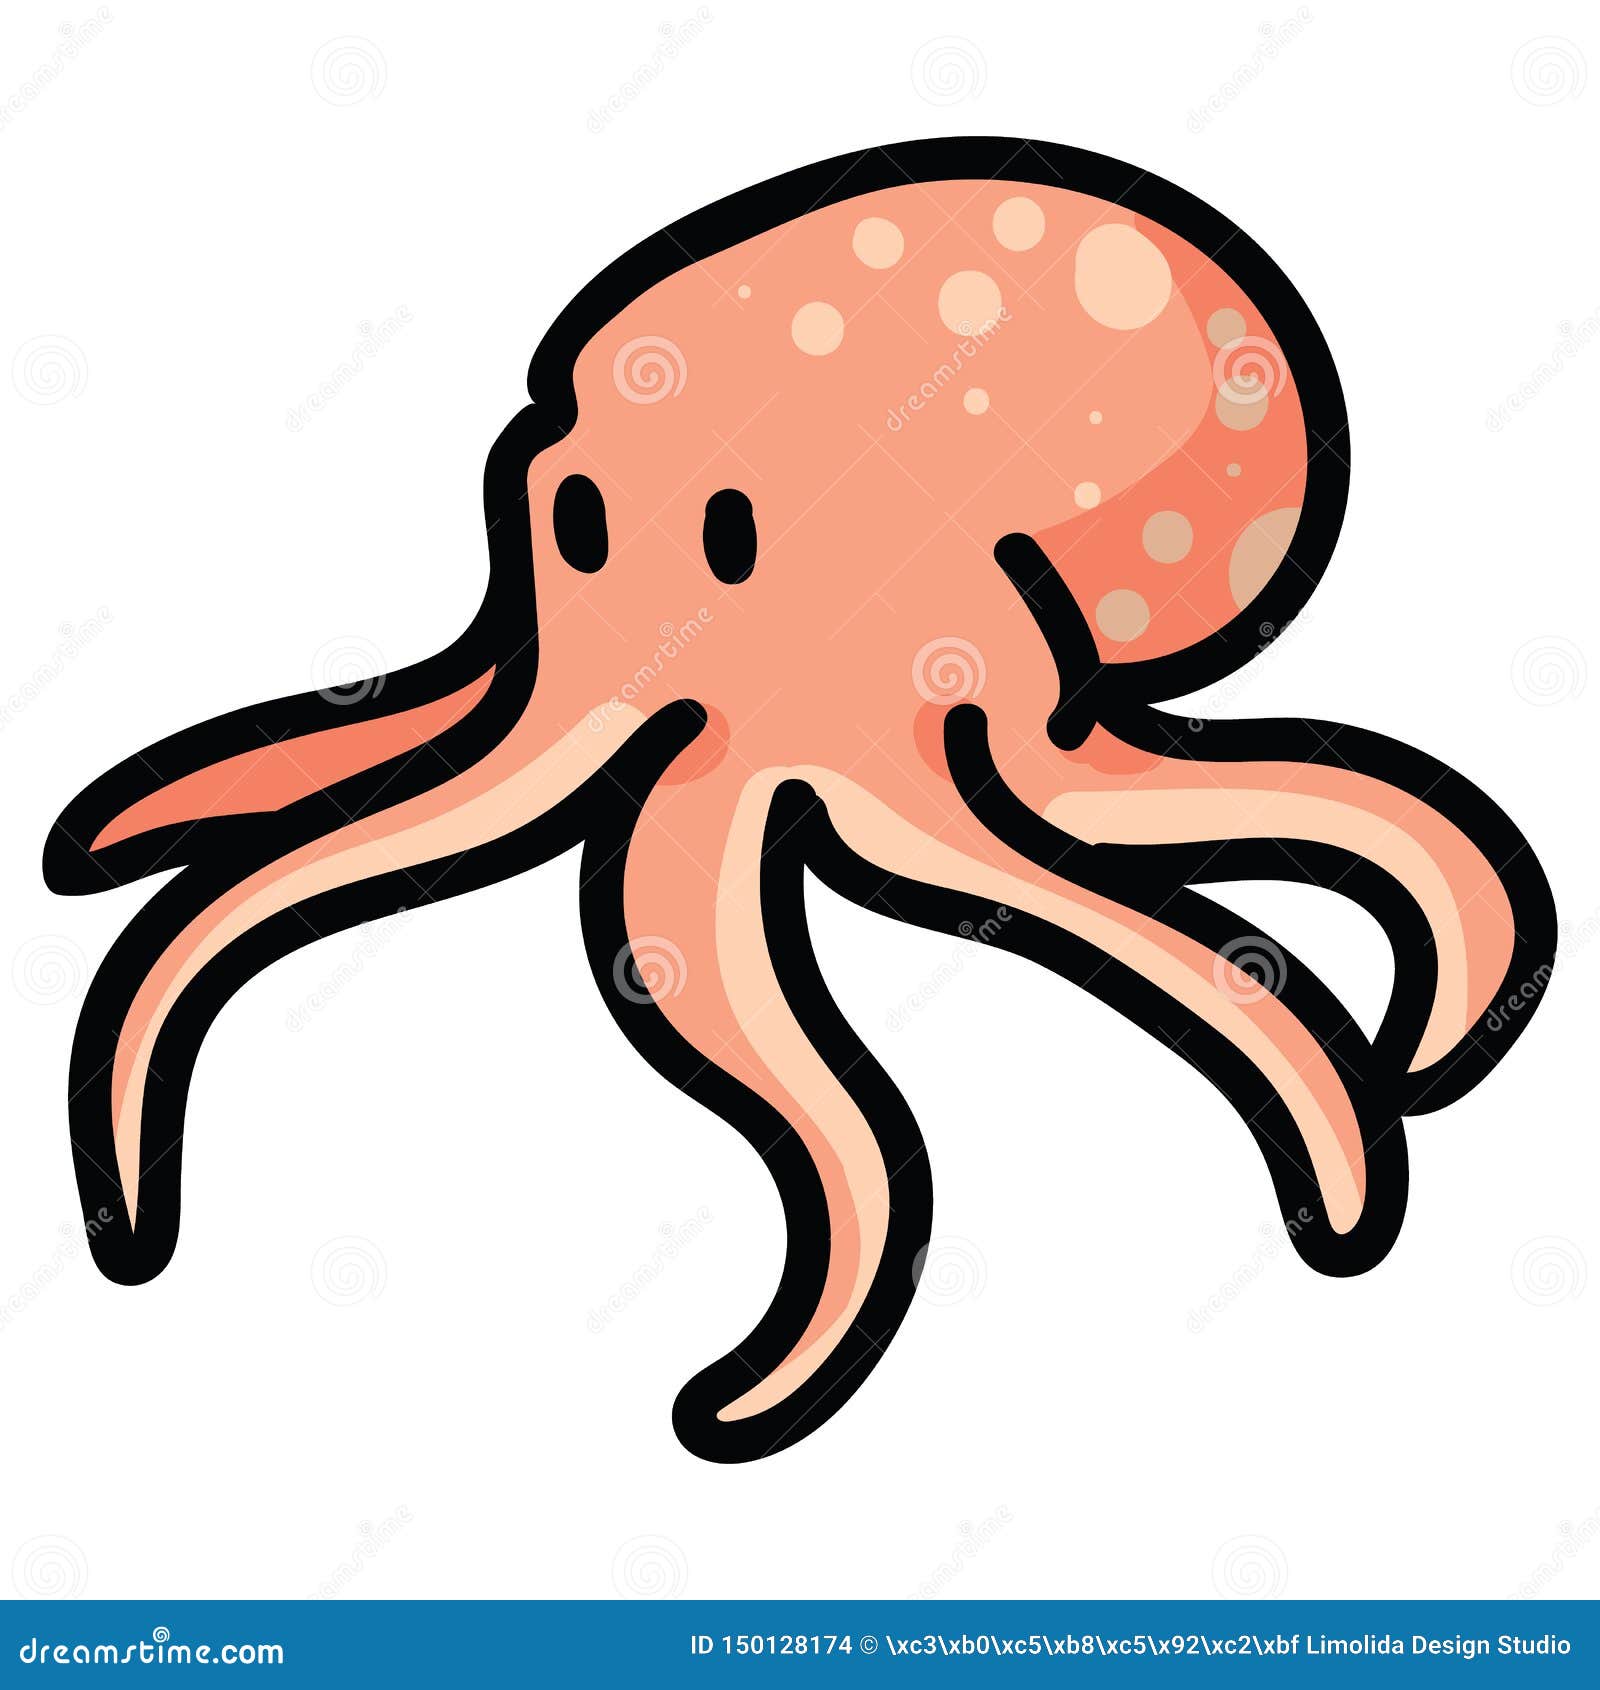 Cute Octopus Cartoon Vector Illustration Motif Set Hand Drawn Isolated